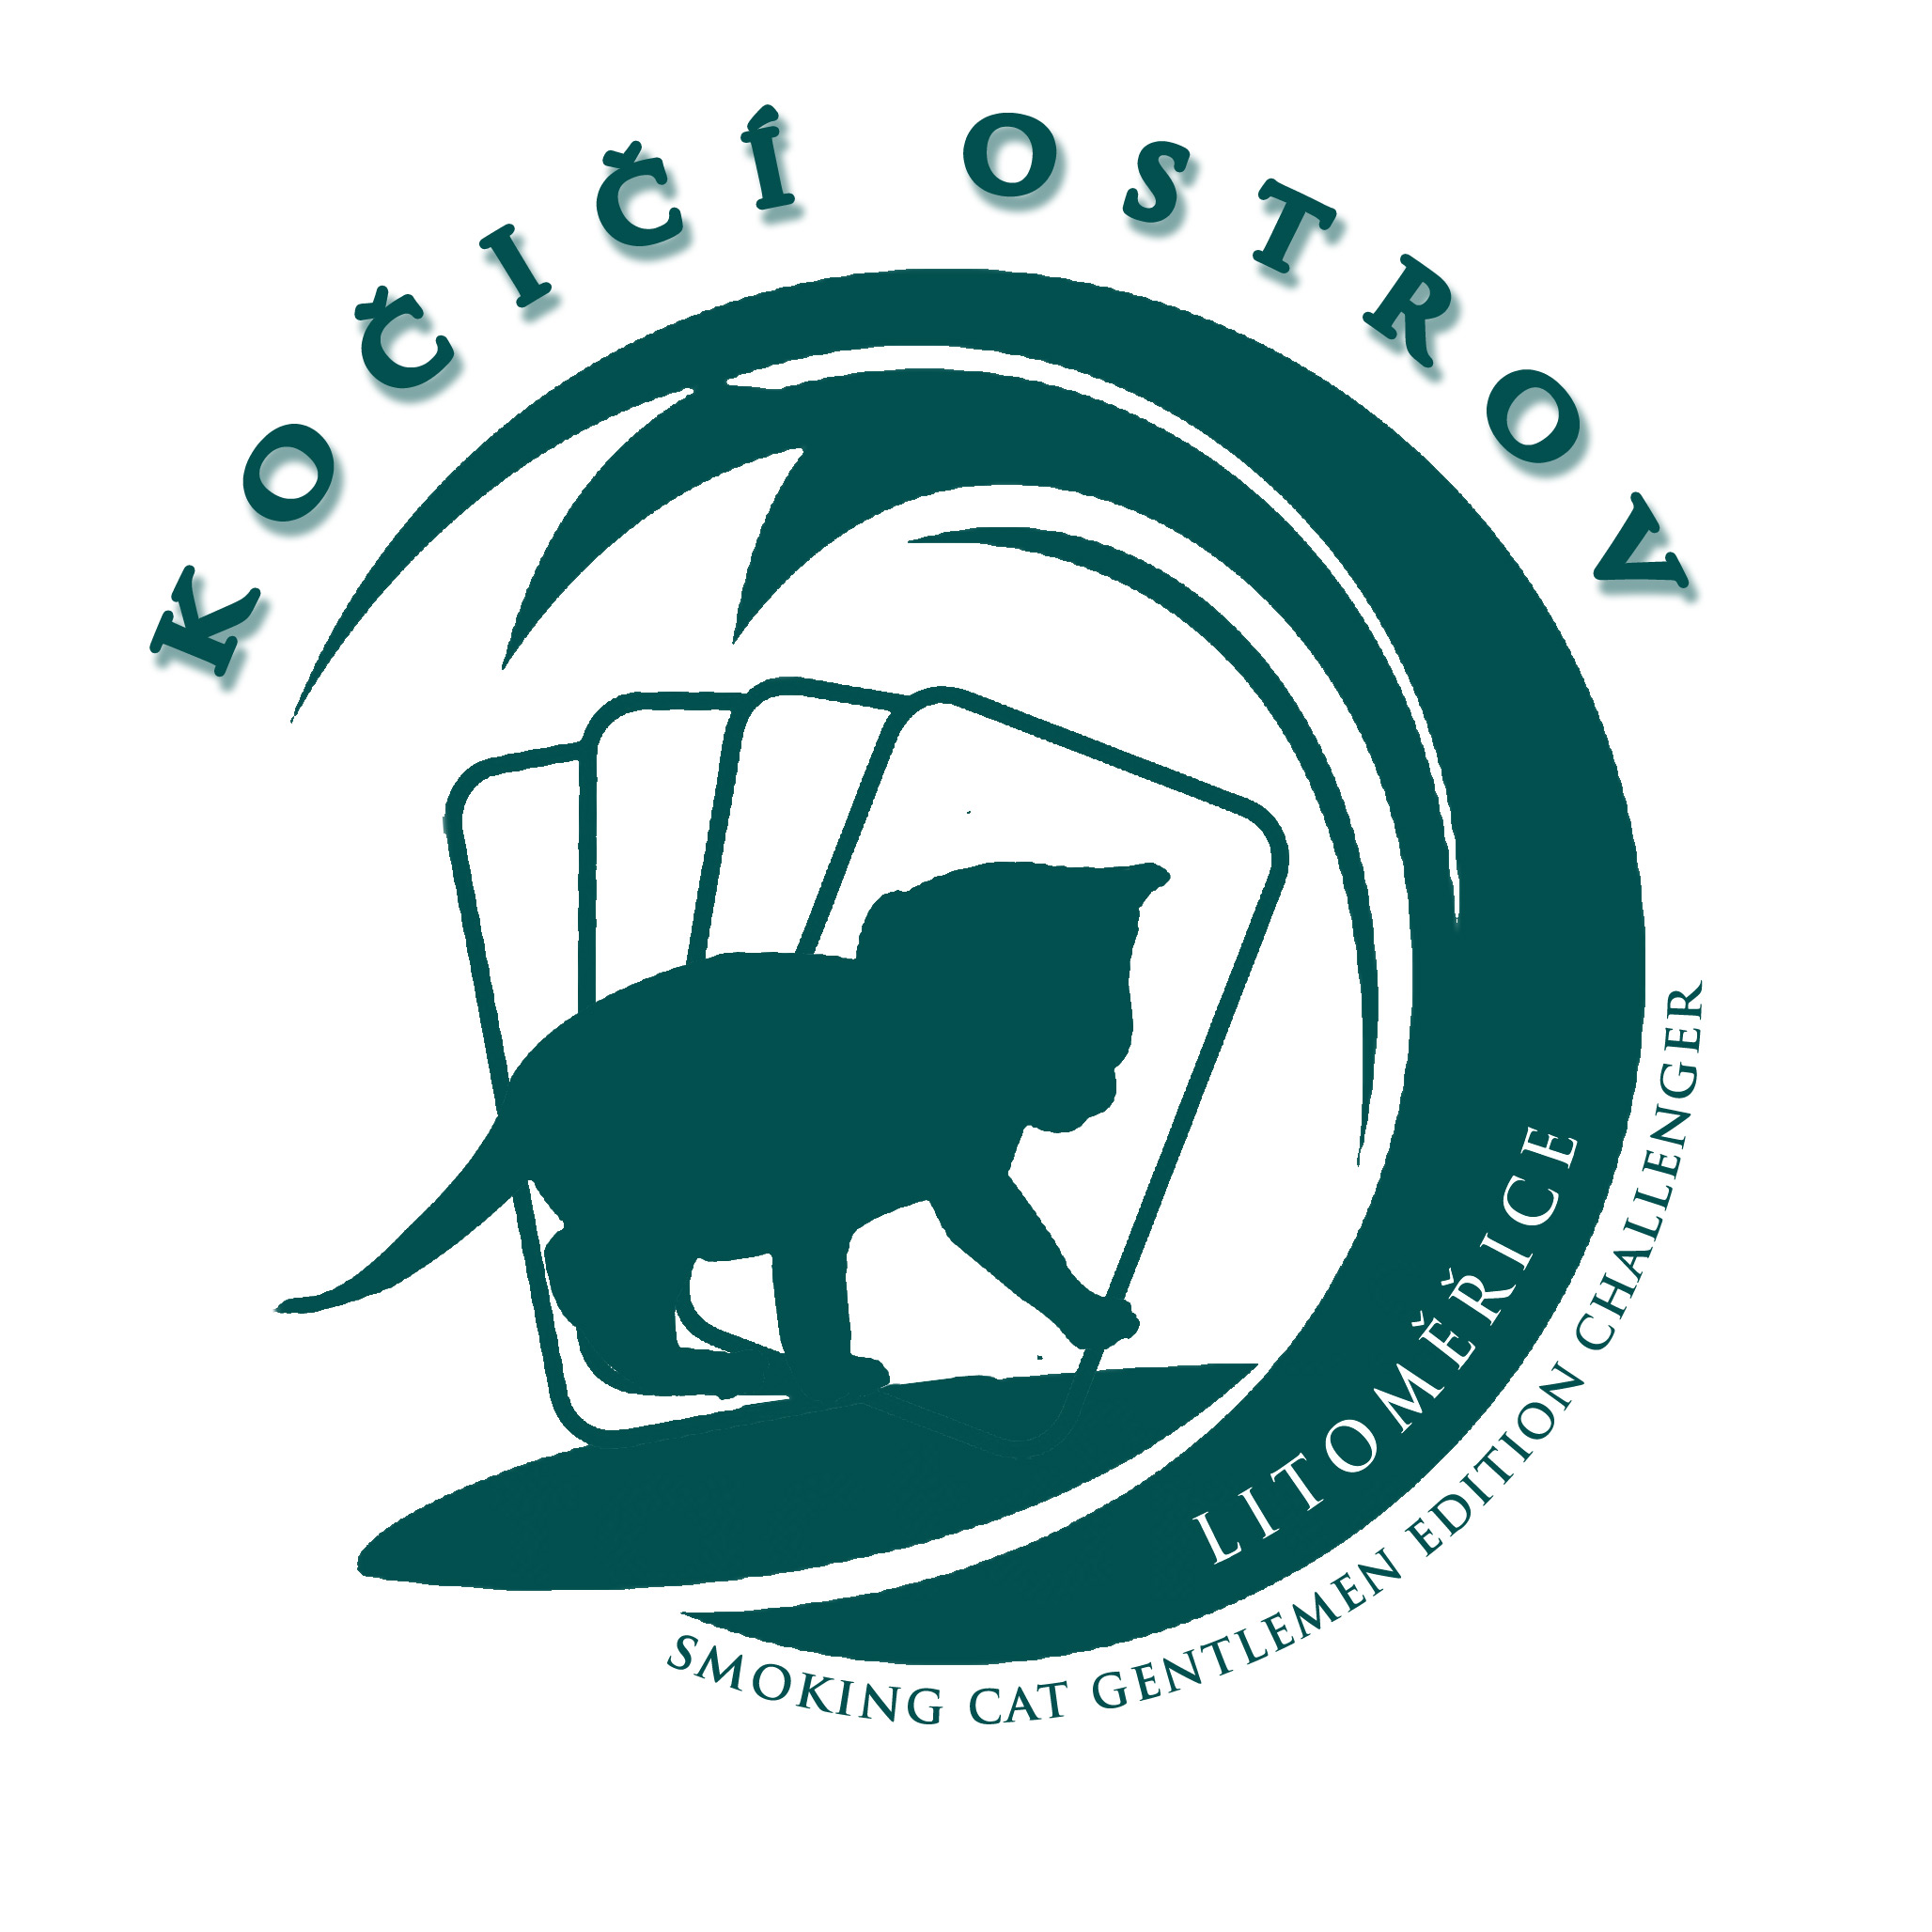 Logo Smoking Cat turnaje Kočičí ostrov (by Robert Ptáček)